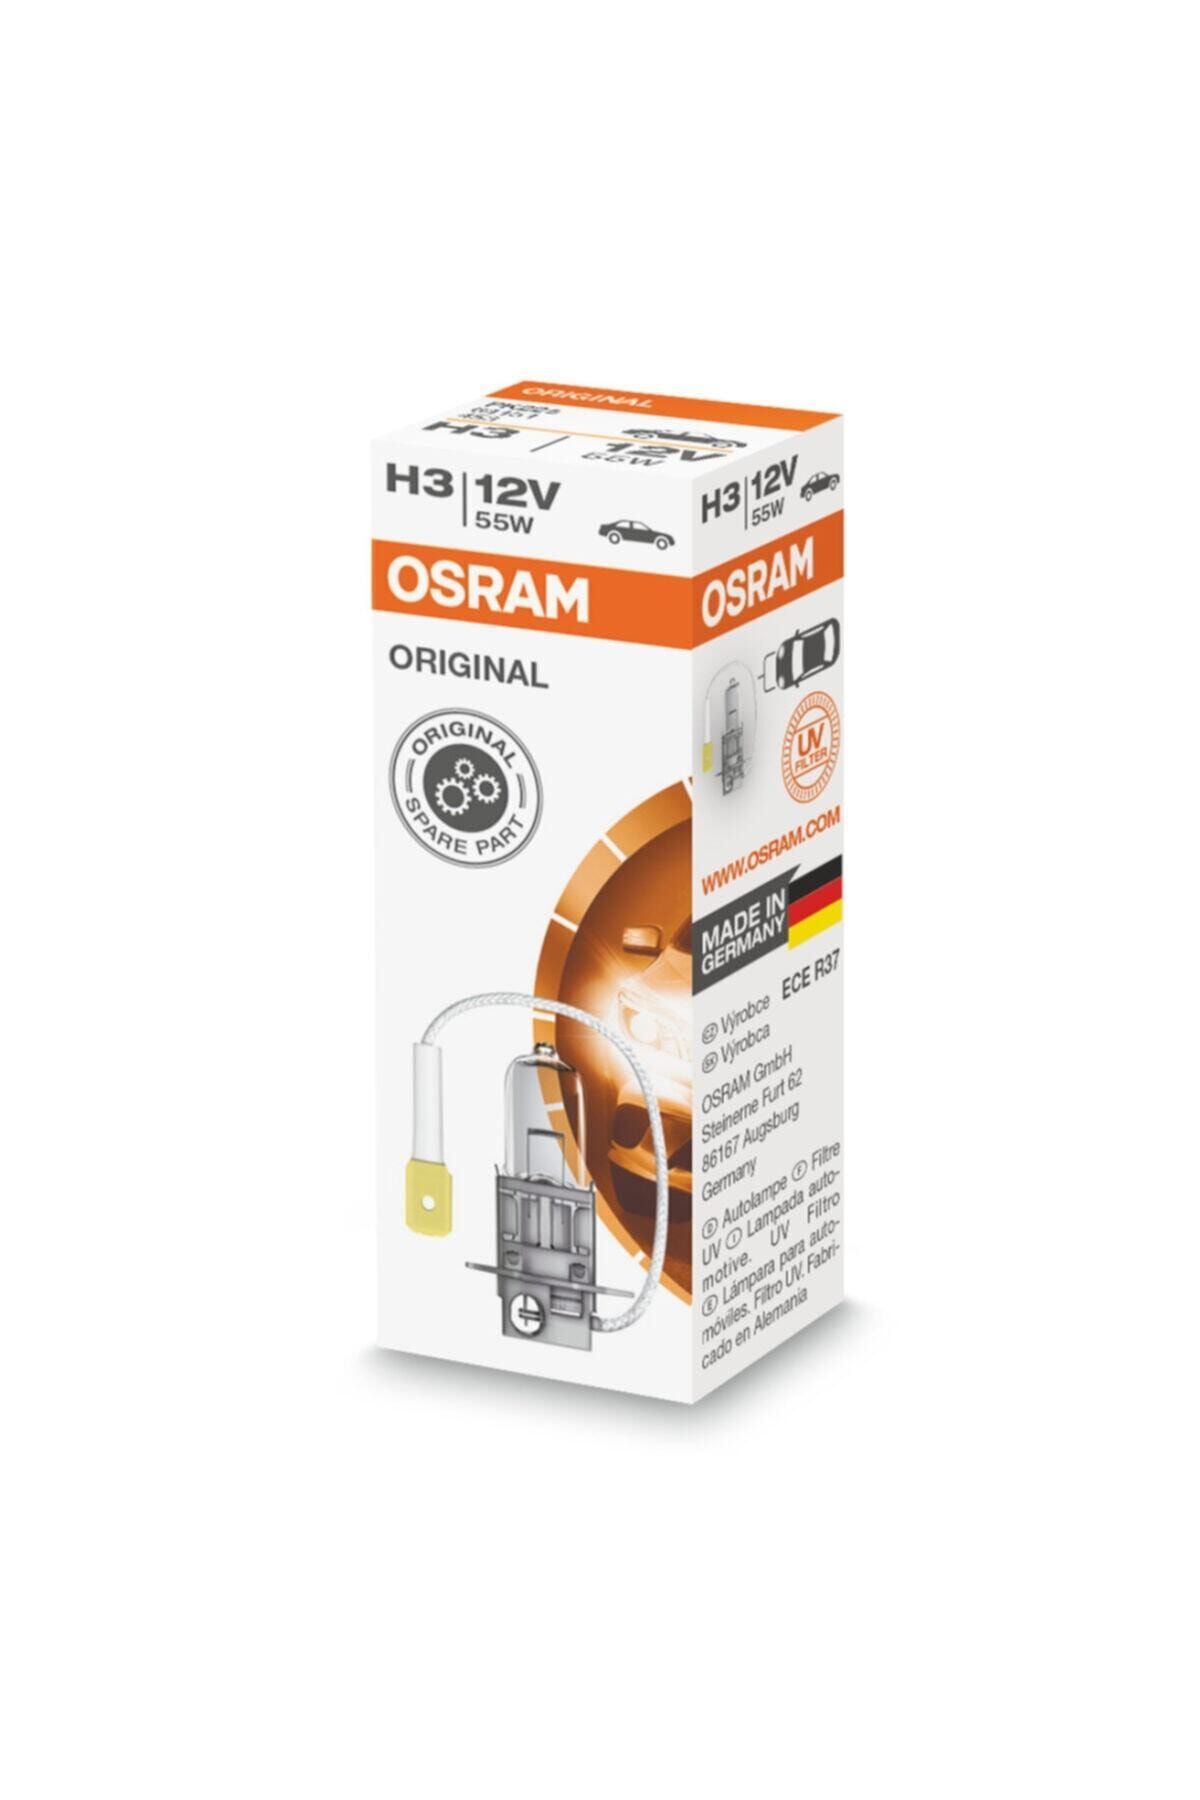 Osram 12v H3 Sis Farı Ampulü 1 Adet Orjinal 64151 Alman Malı Fiyatı,  Yorumları - Trendyol